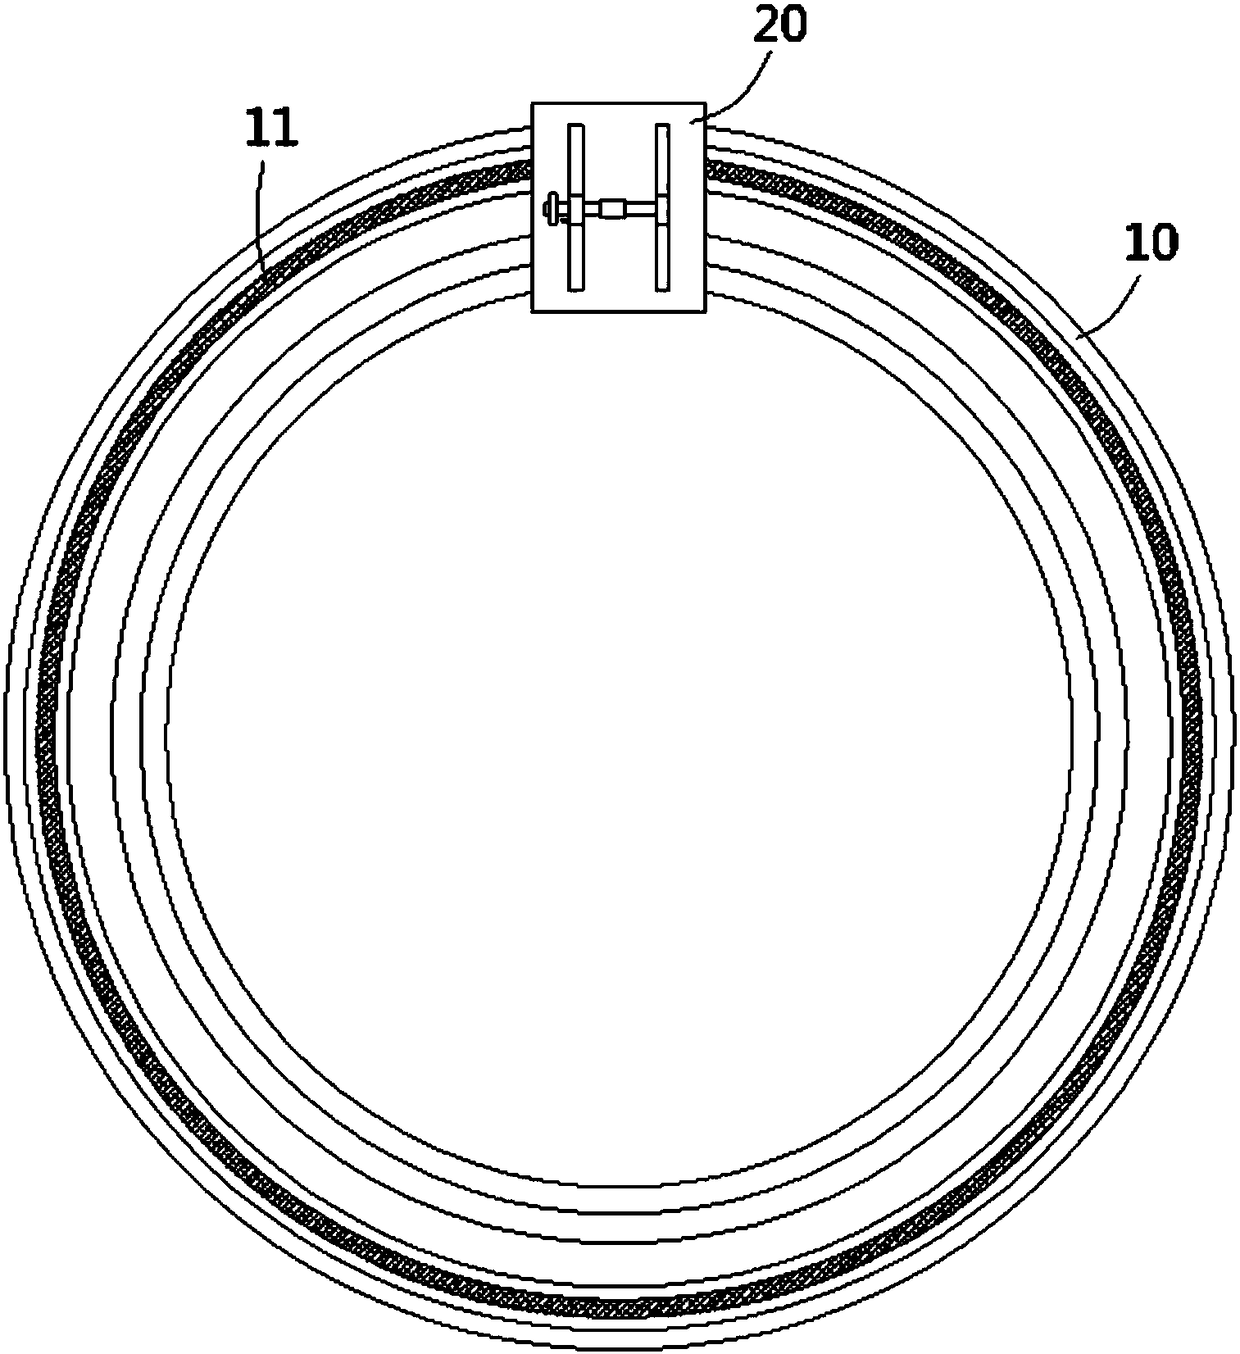 A circular movable led light mechanism